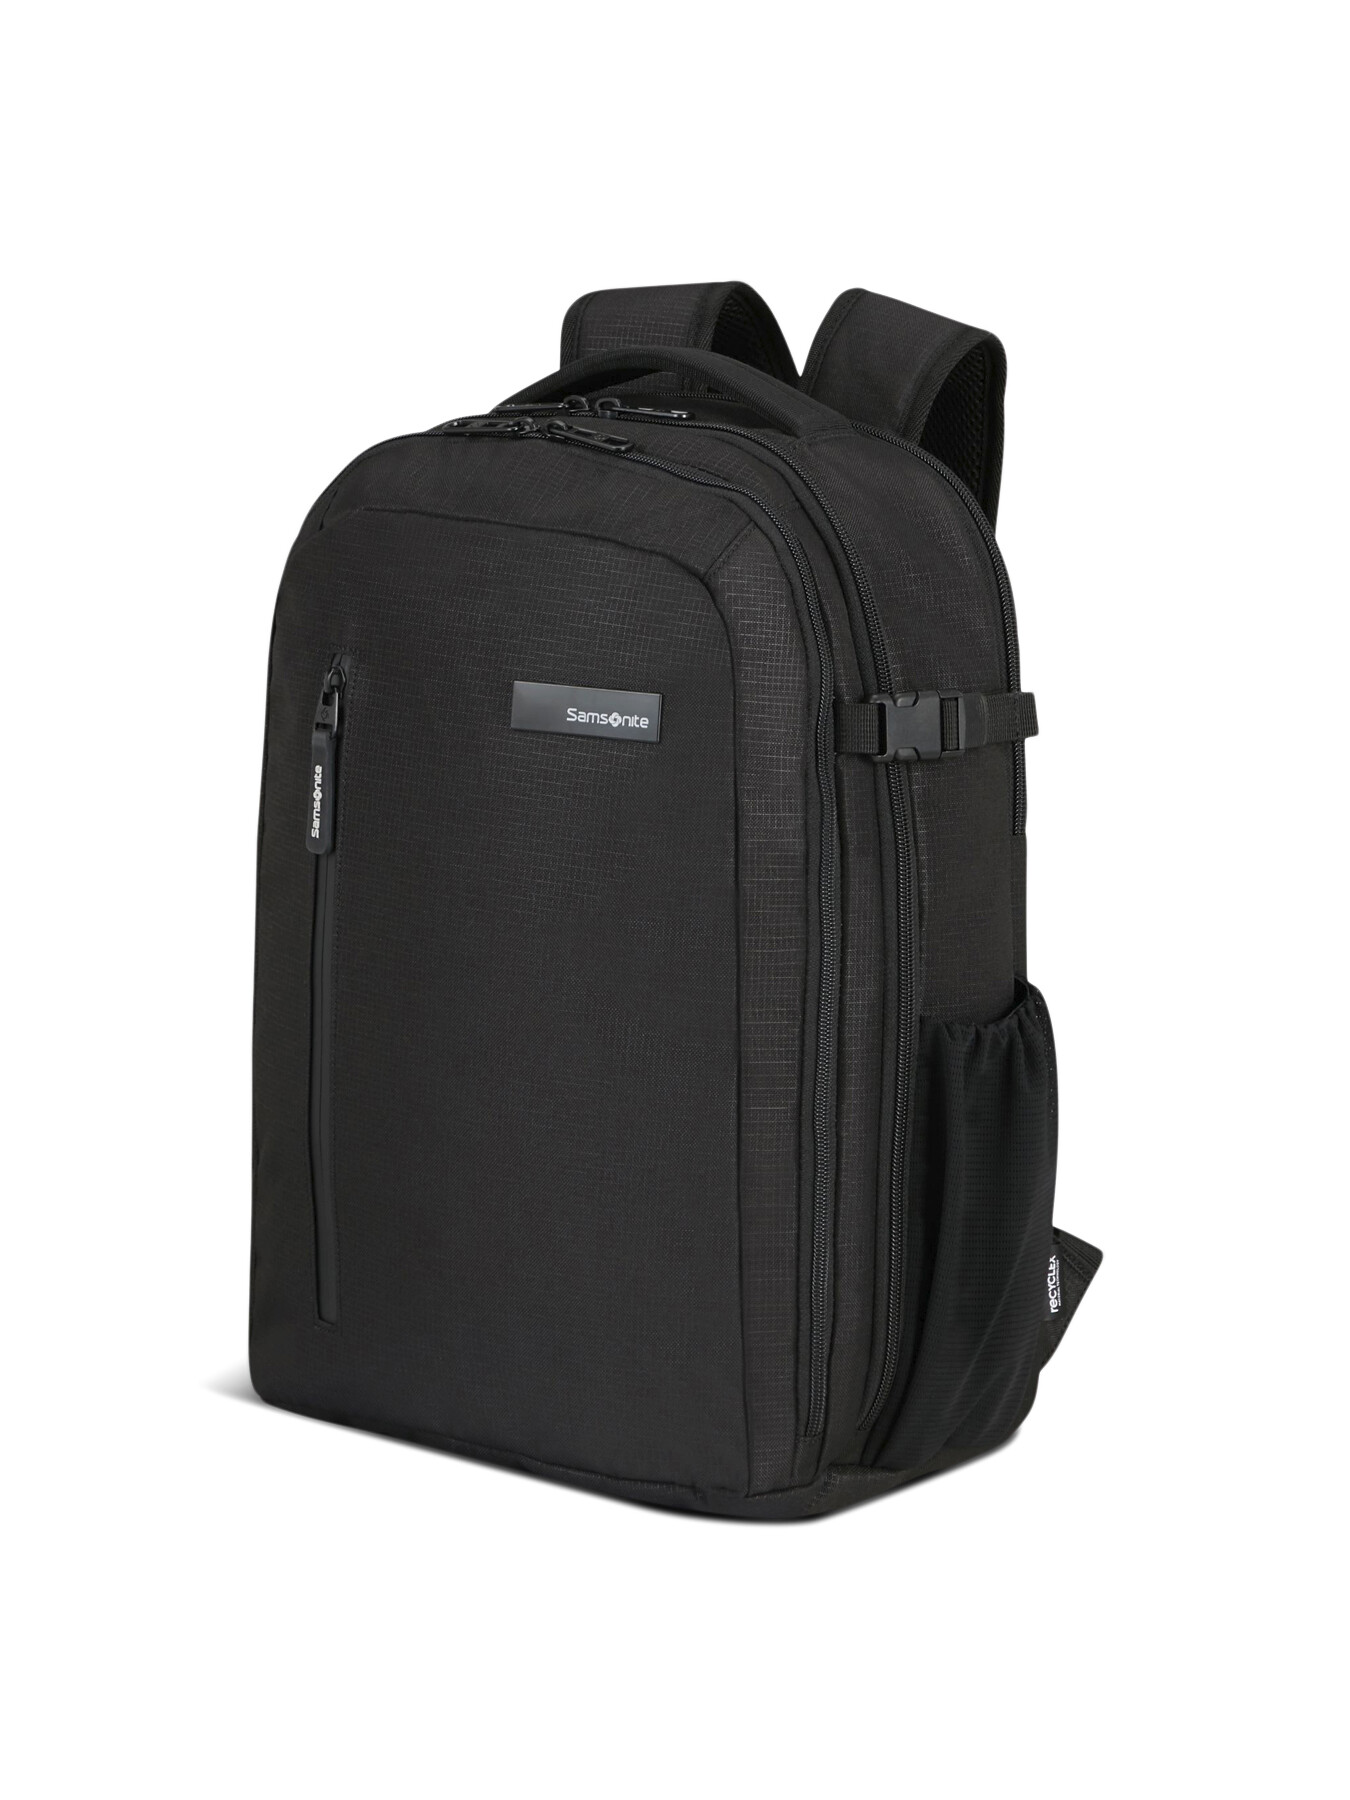 Samsonite Roader Medium Laptop Backpack | Fenwick